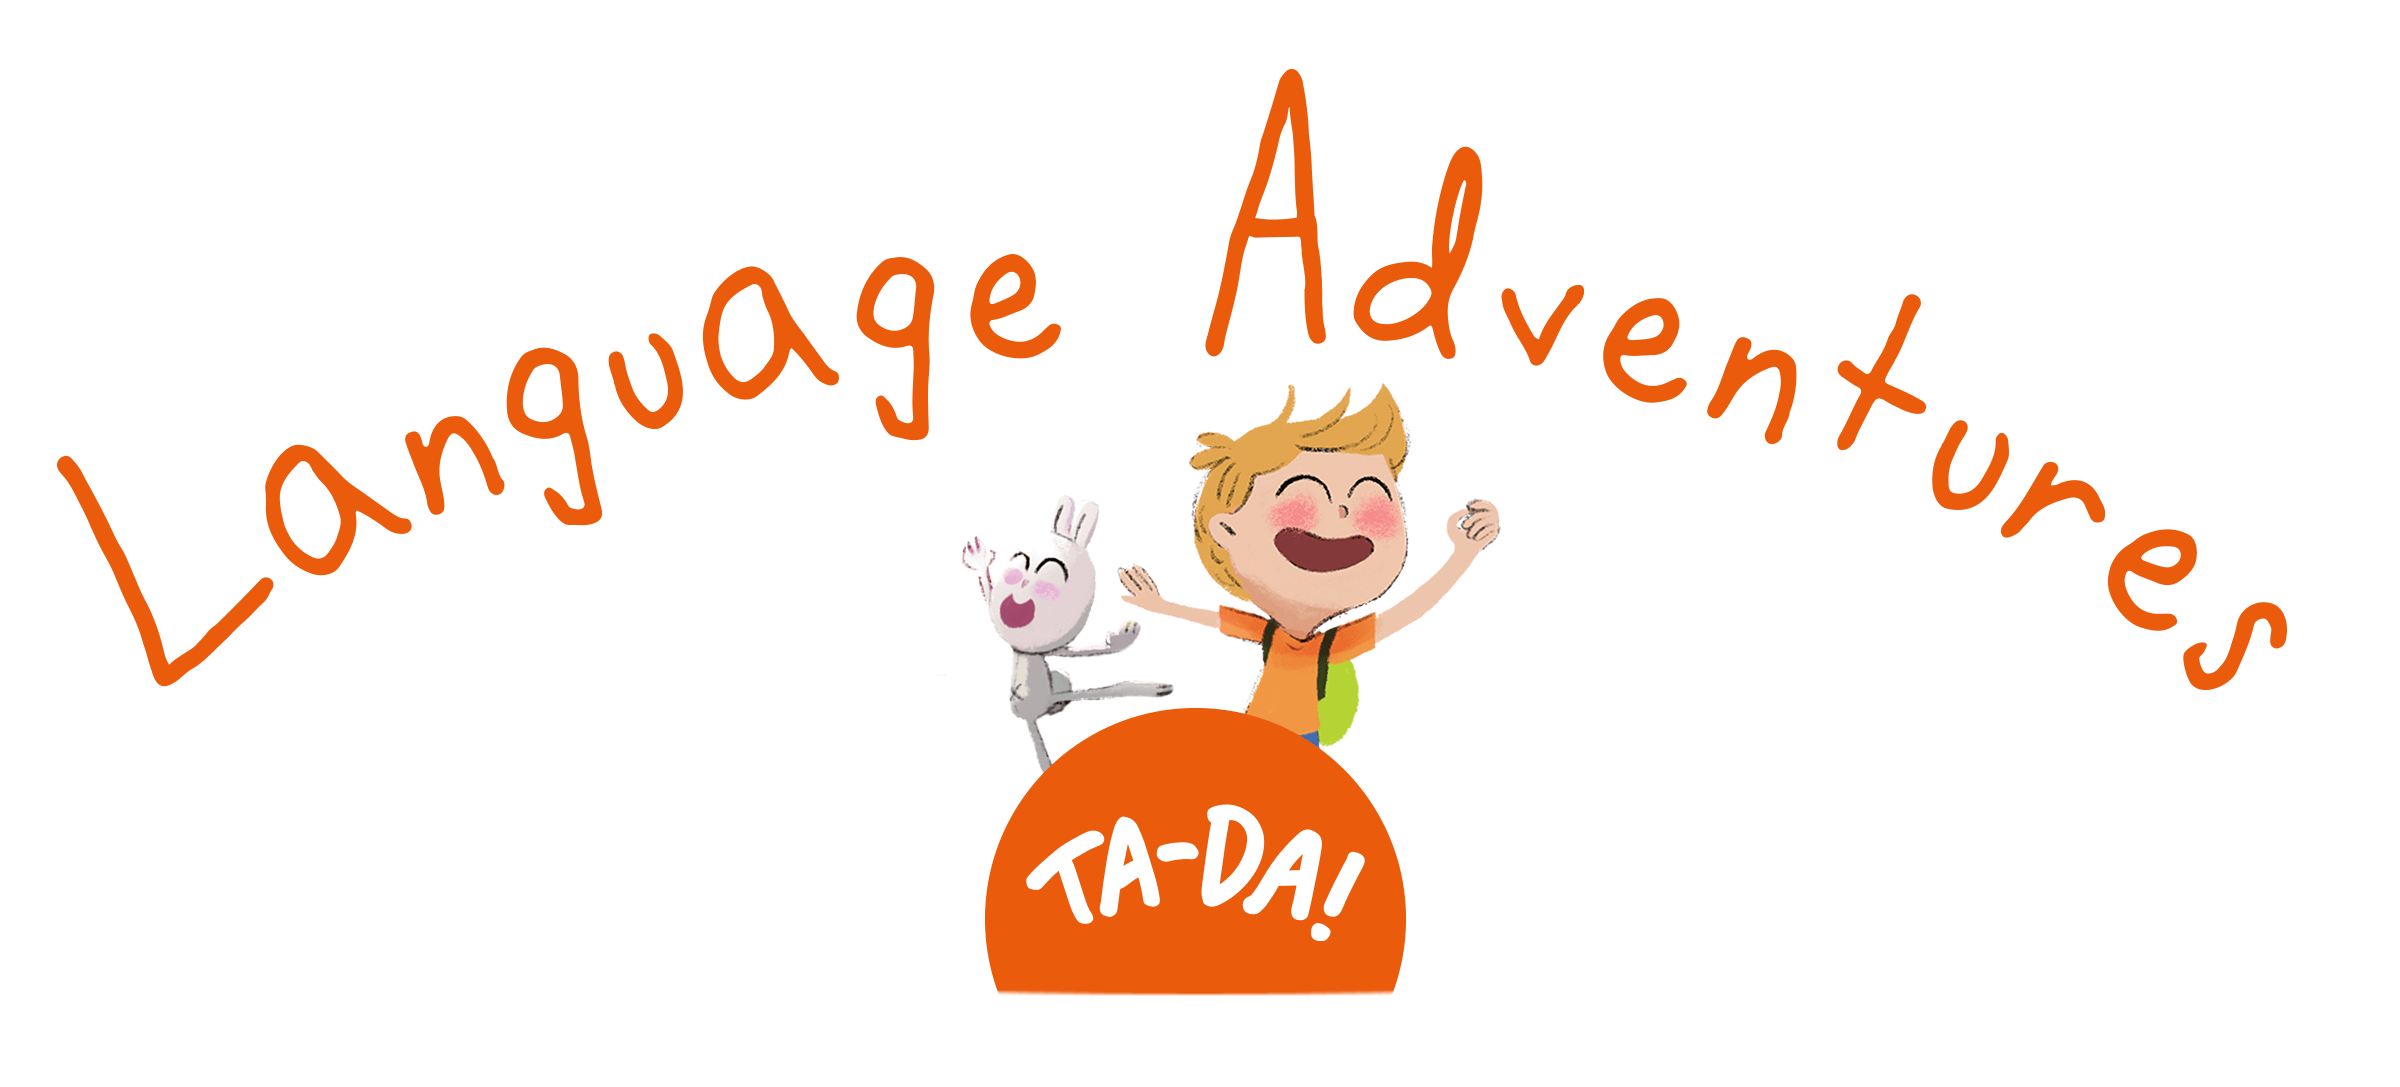 language-adventures-logo-bunny-boy.png